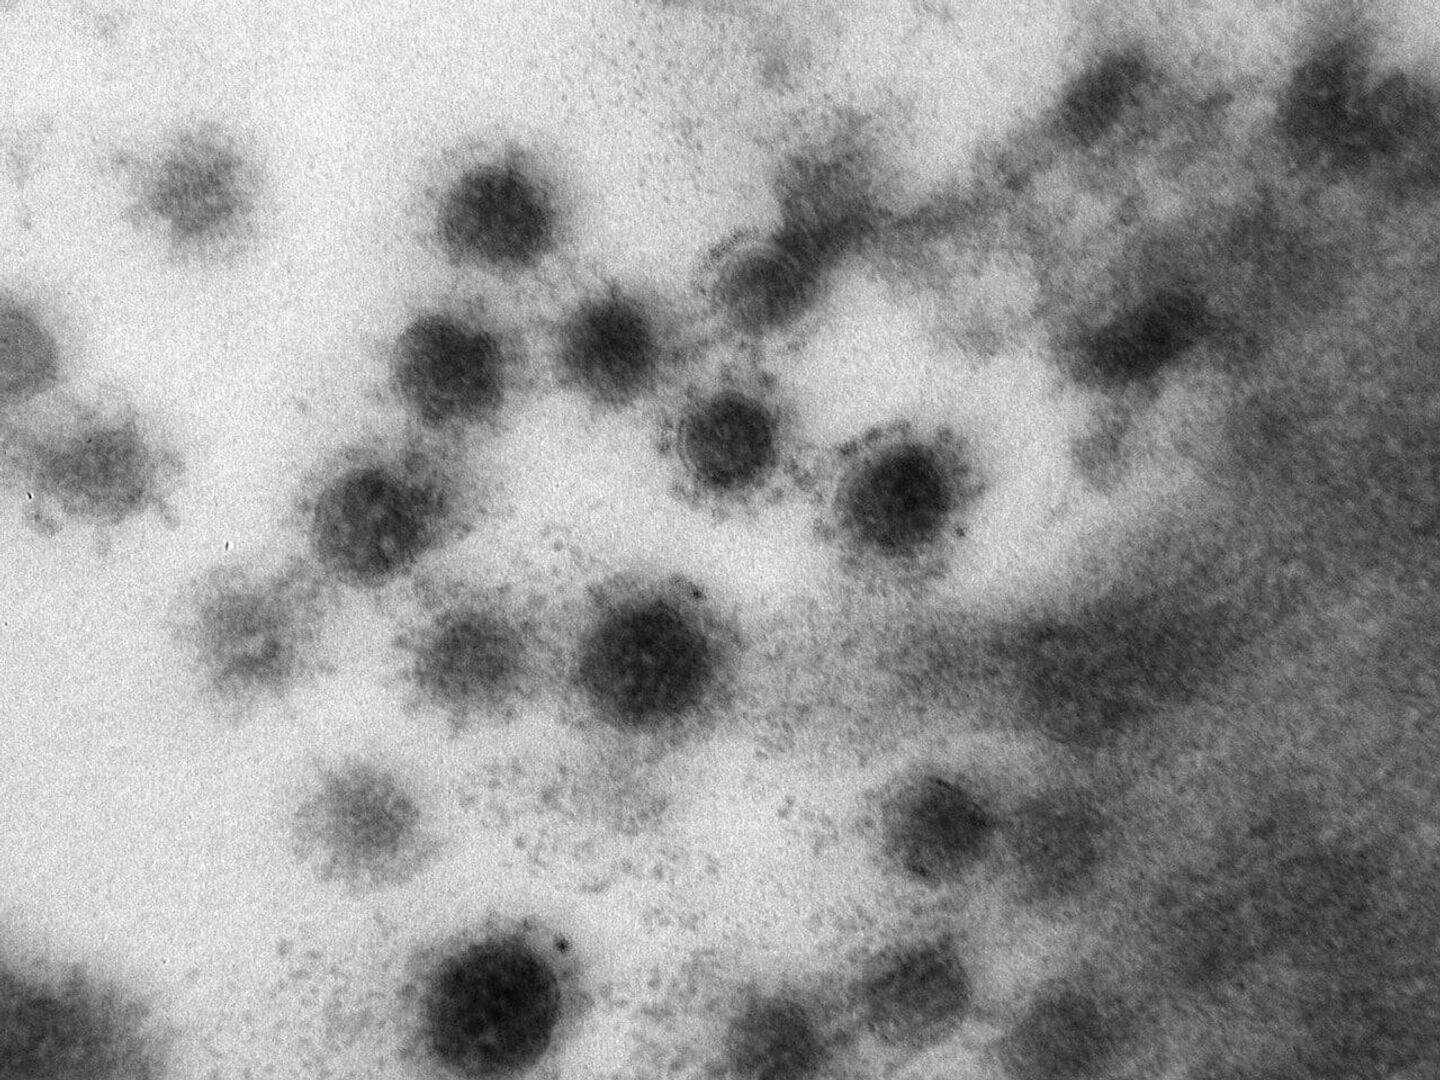 Ковид 19 у взрослых. Вирус Covid 19 под микроскопом. Дельта штамм коронавируса под микроскопом. SARS-cov-2 Дельта штамм. Вирус коронавирус микроскоп.